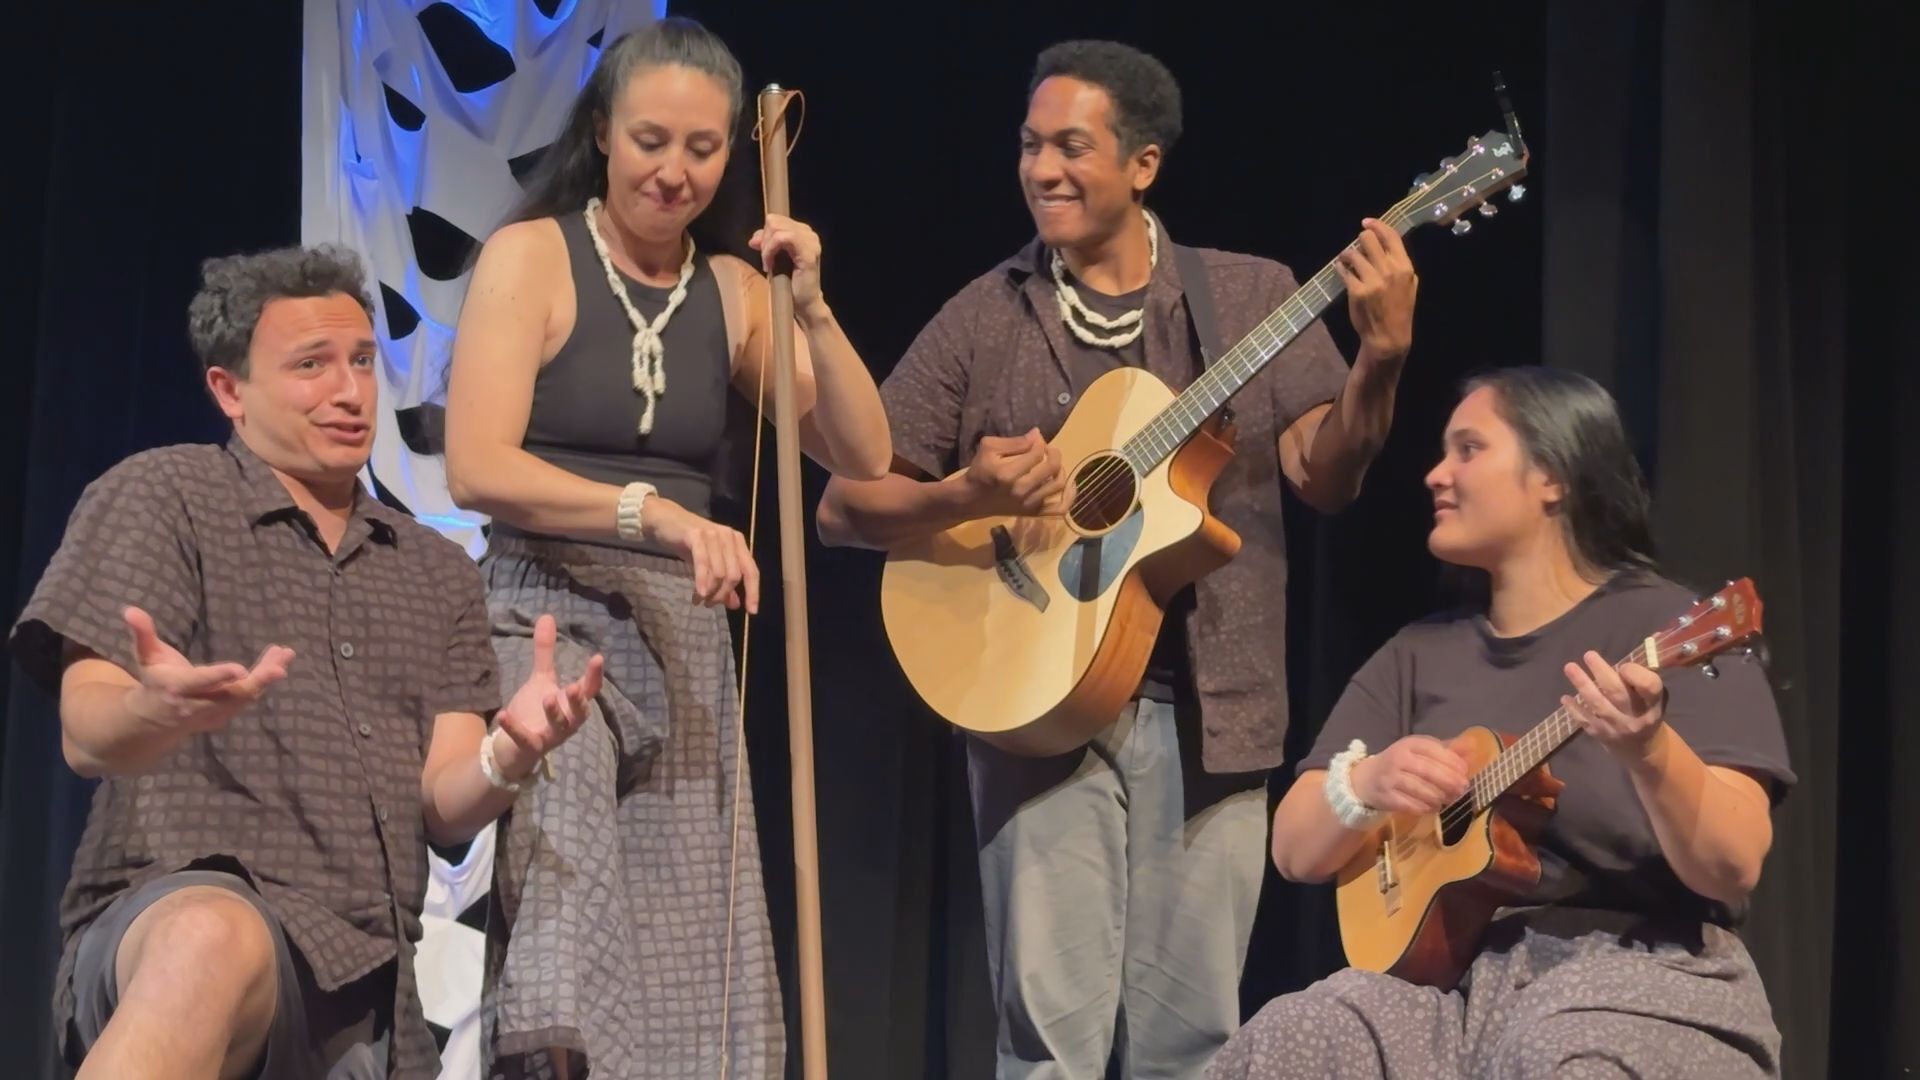 Theatre show from Honolulu brings Native Hawaiian culture to Winnipeg